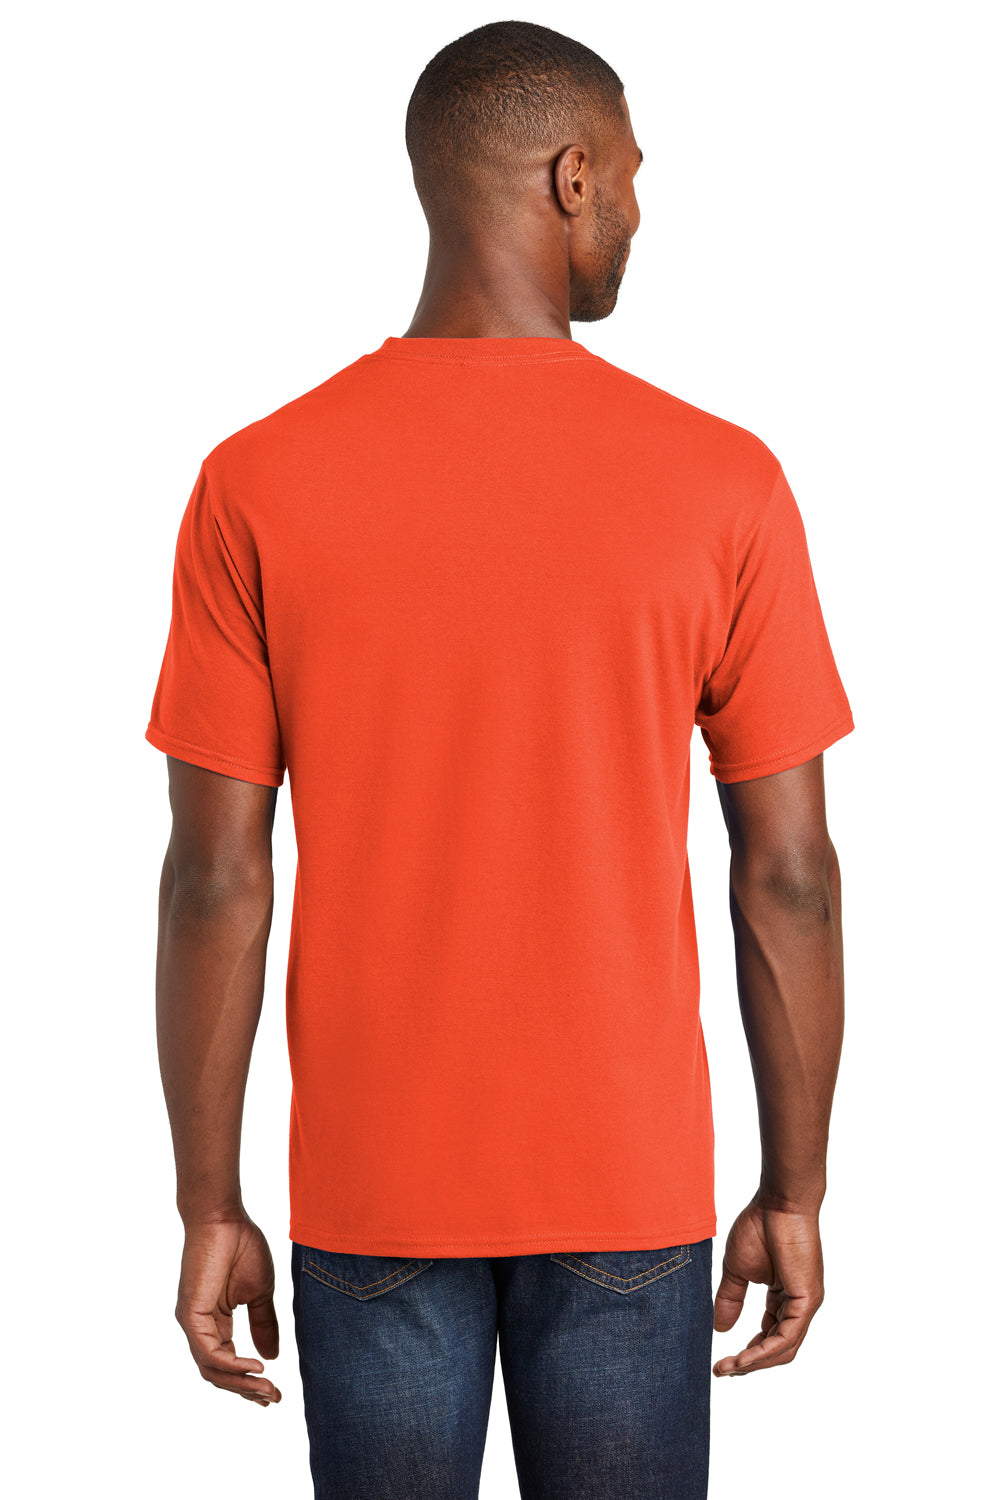 Port & Company PC450 Mens Fan Favorite Short Sleeve Crewneck T-Shirt Orange Back